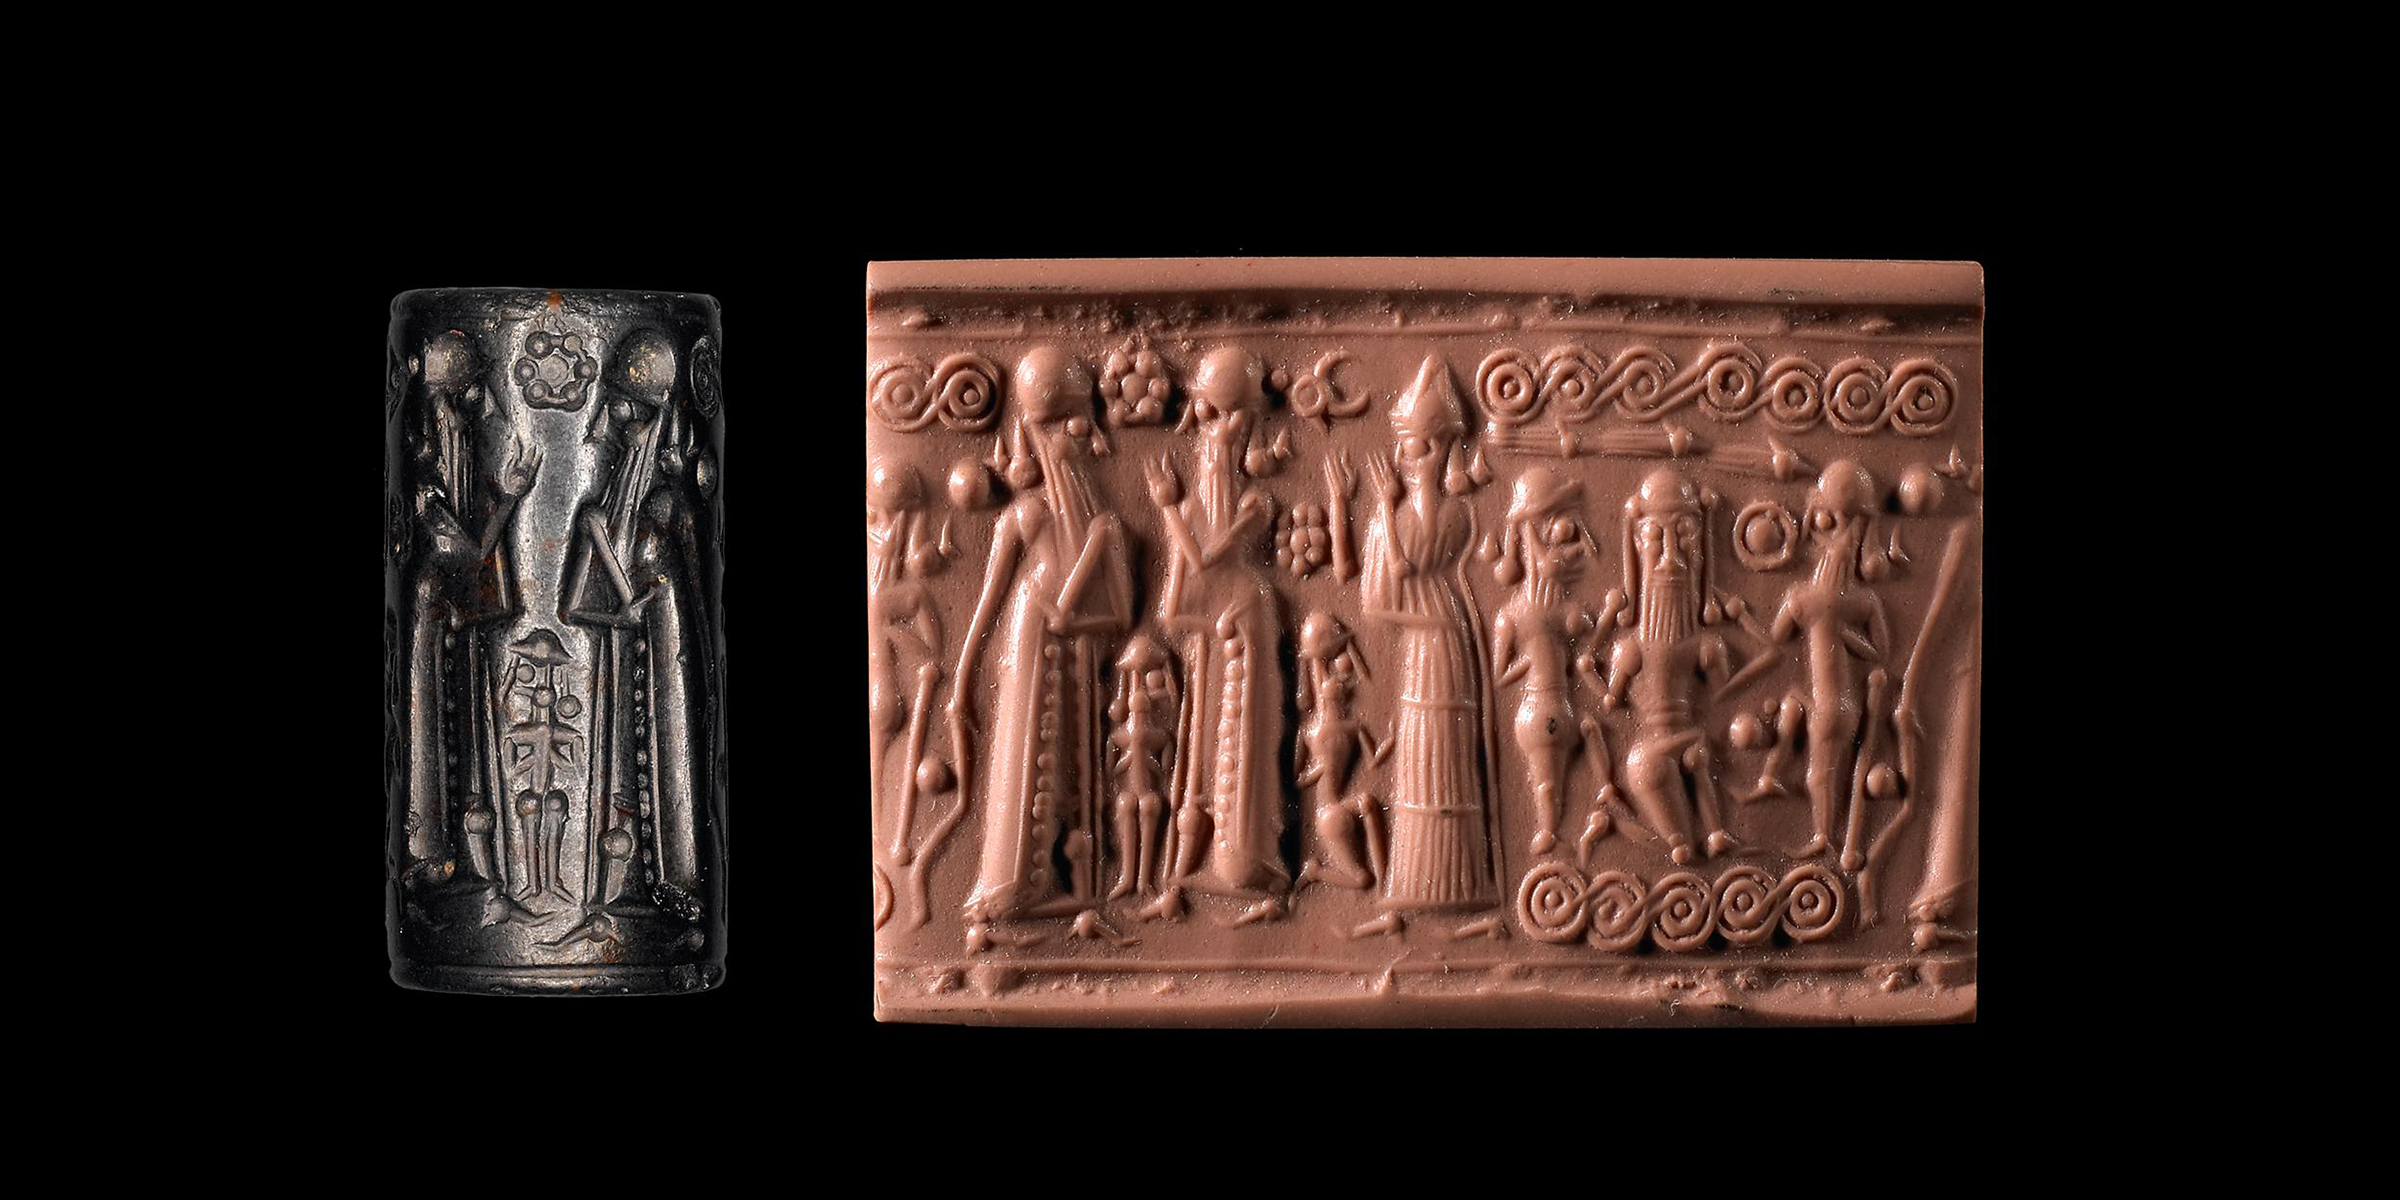 Cylinder seal showing Gilgamesh and Enkidu killing the giant Humbaba, Mitannian, c. 1400–1300 BC.